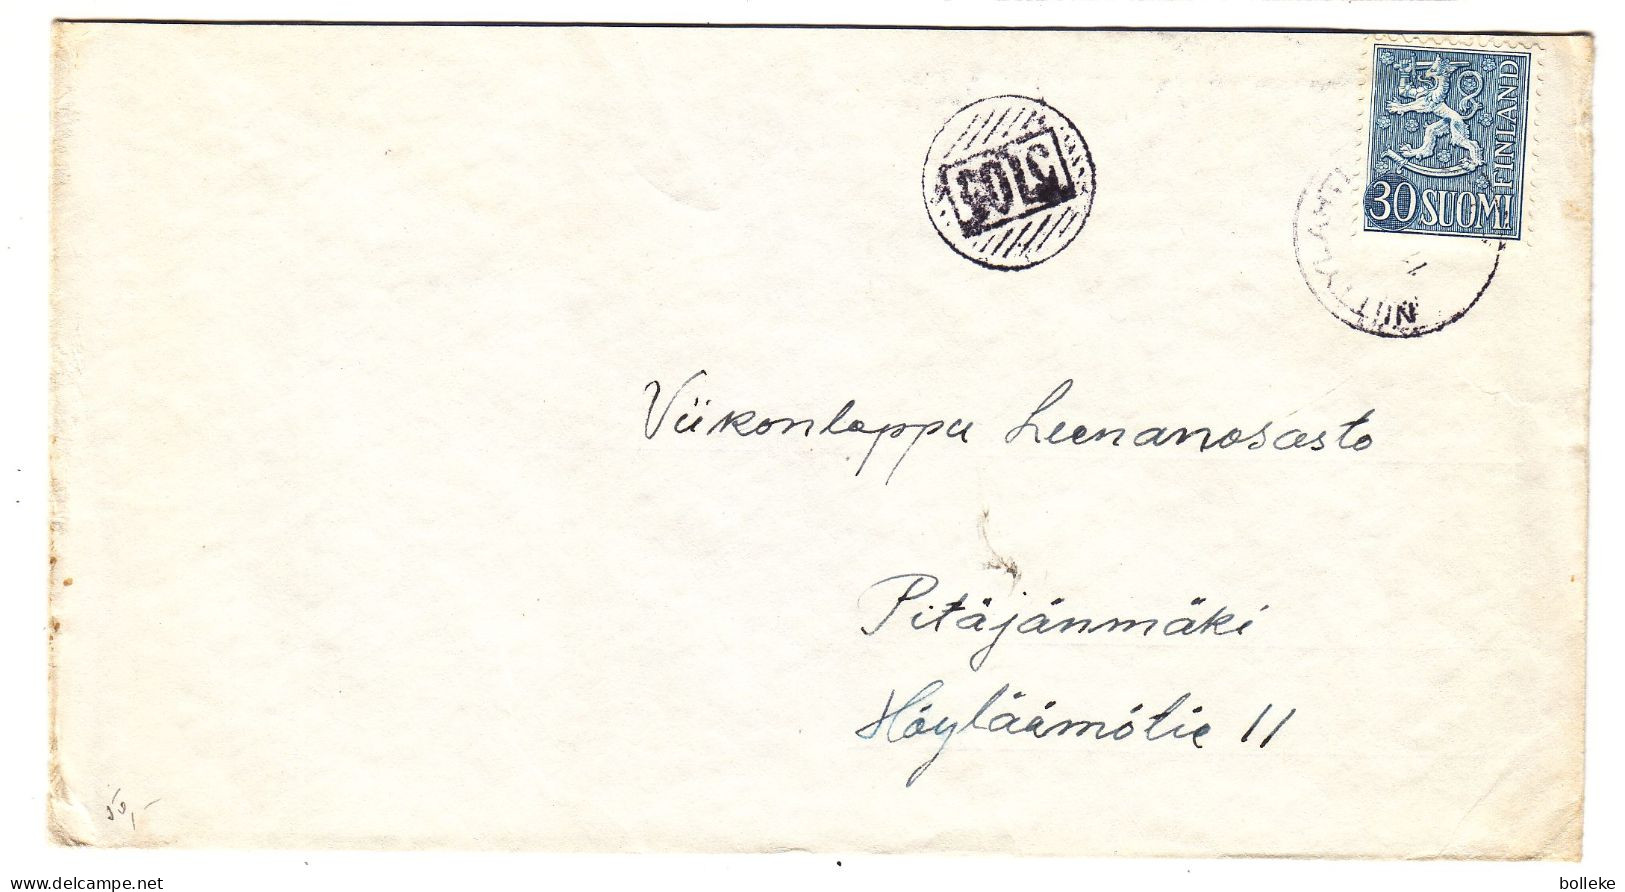 Finlande - Lettre De 1955 - Oblit Niitylahti - Avec Cachet Rural - - Briefe U. Dokumente